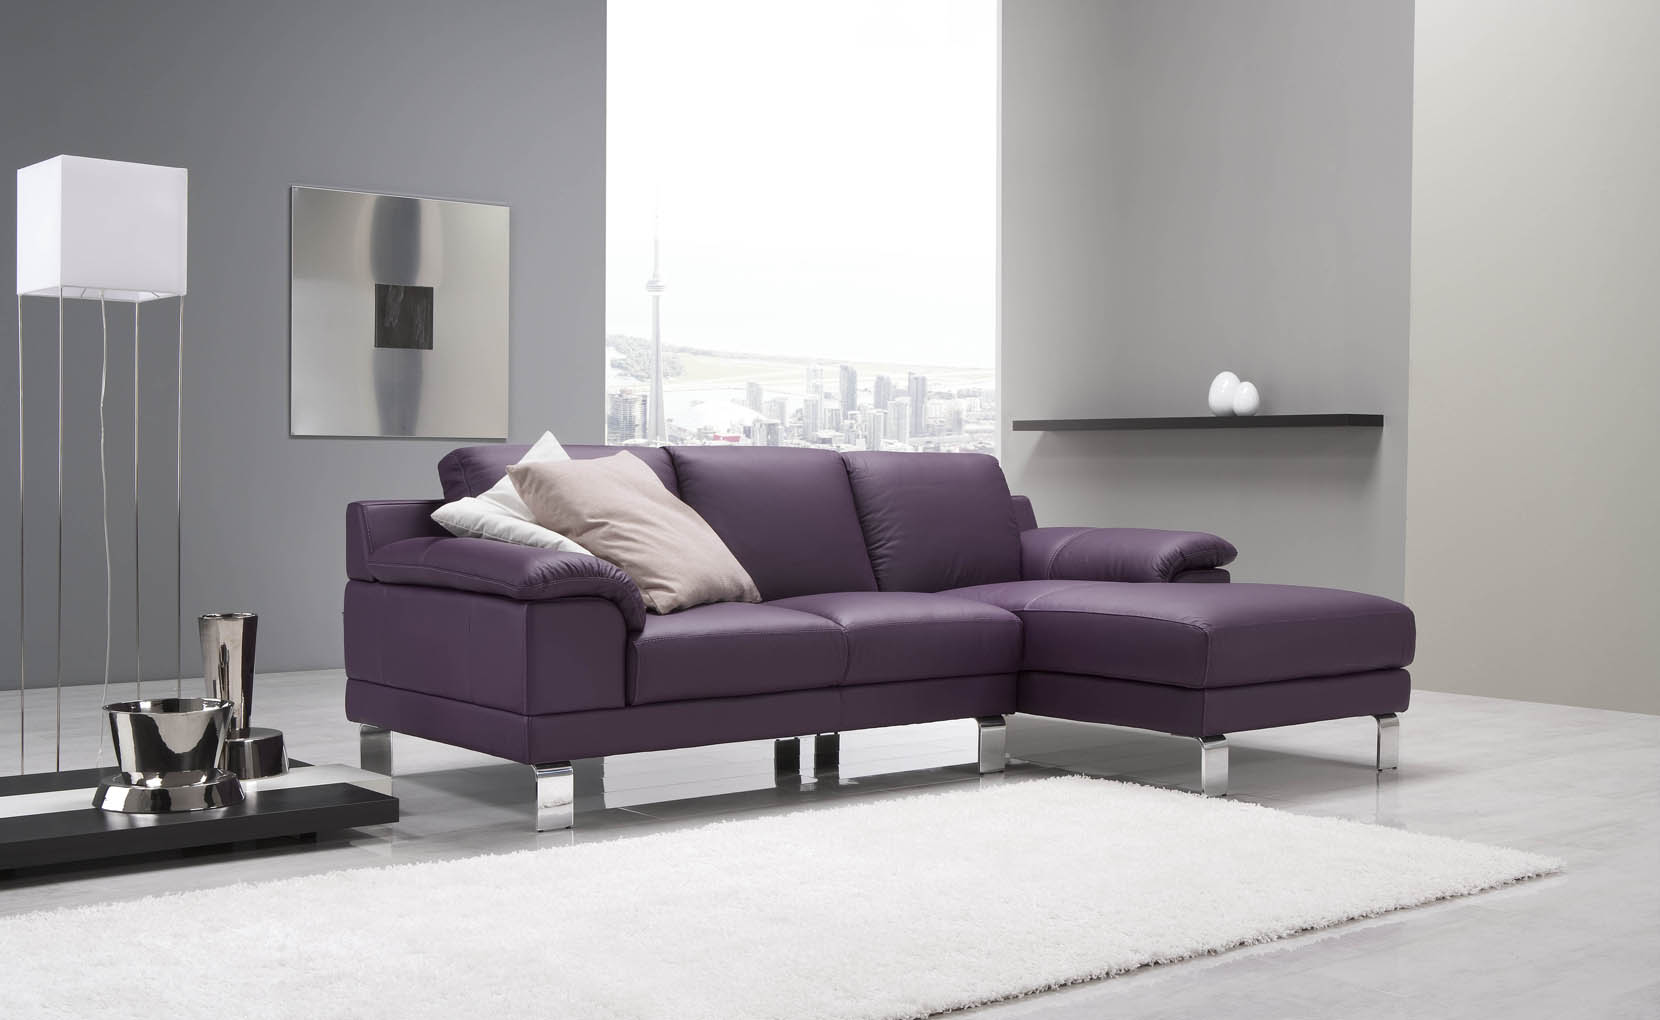 Ego Italiano Sofa available at The Ultimate Living Company. Free